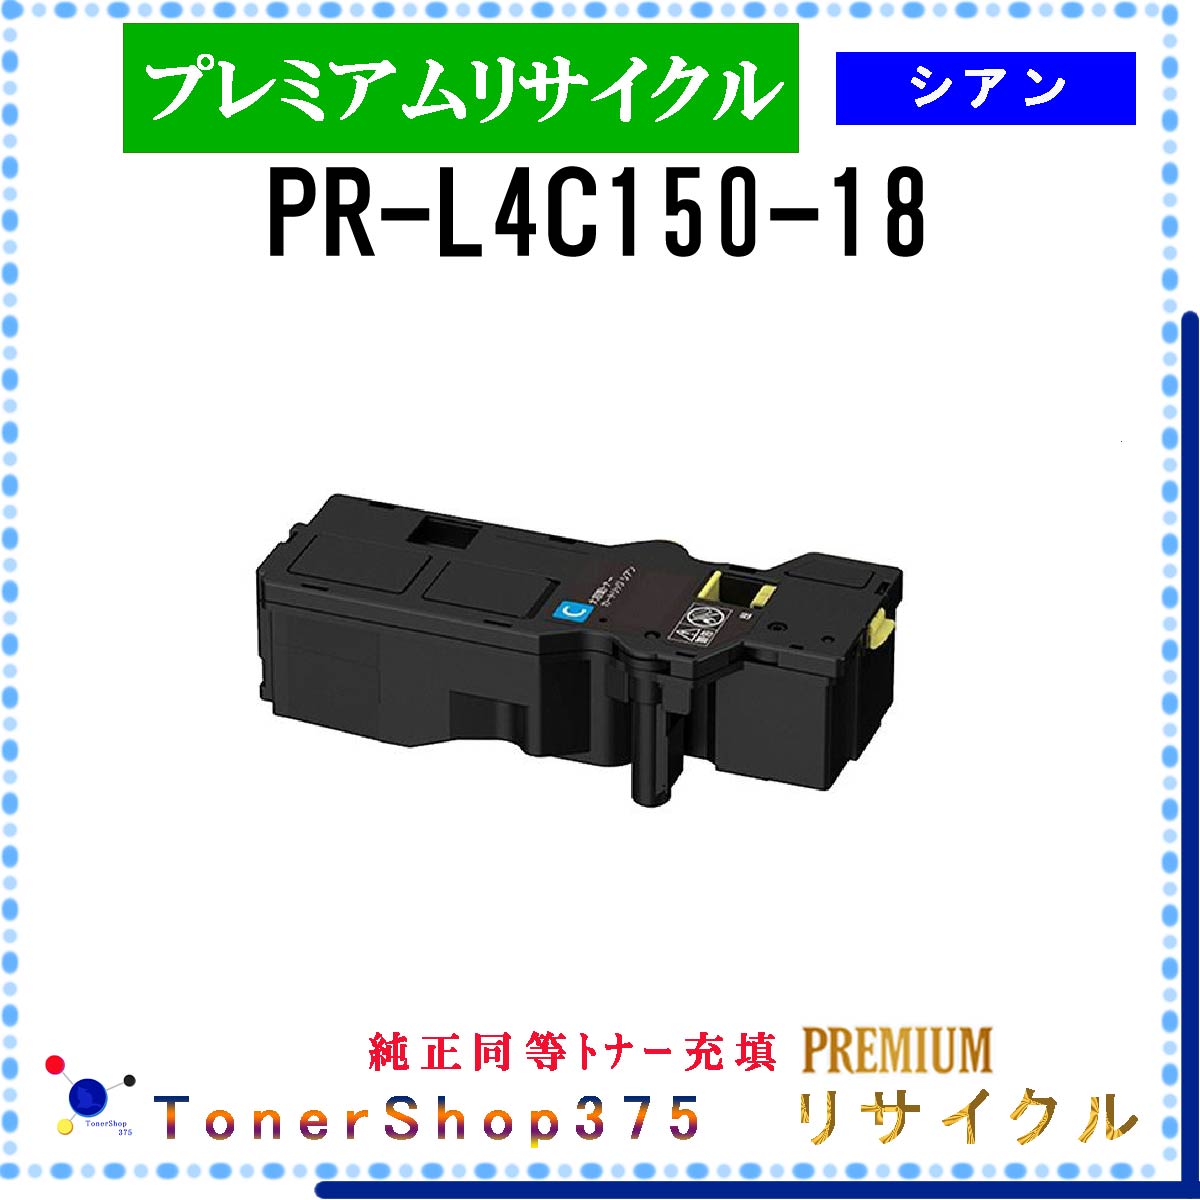 NEC y PR-L4C150-18 z VA v~ATCN gi[ TCNHƉFH蒼 STMCF aĐ